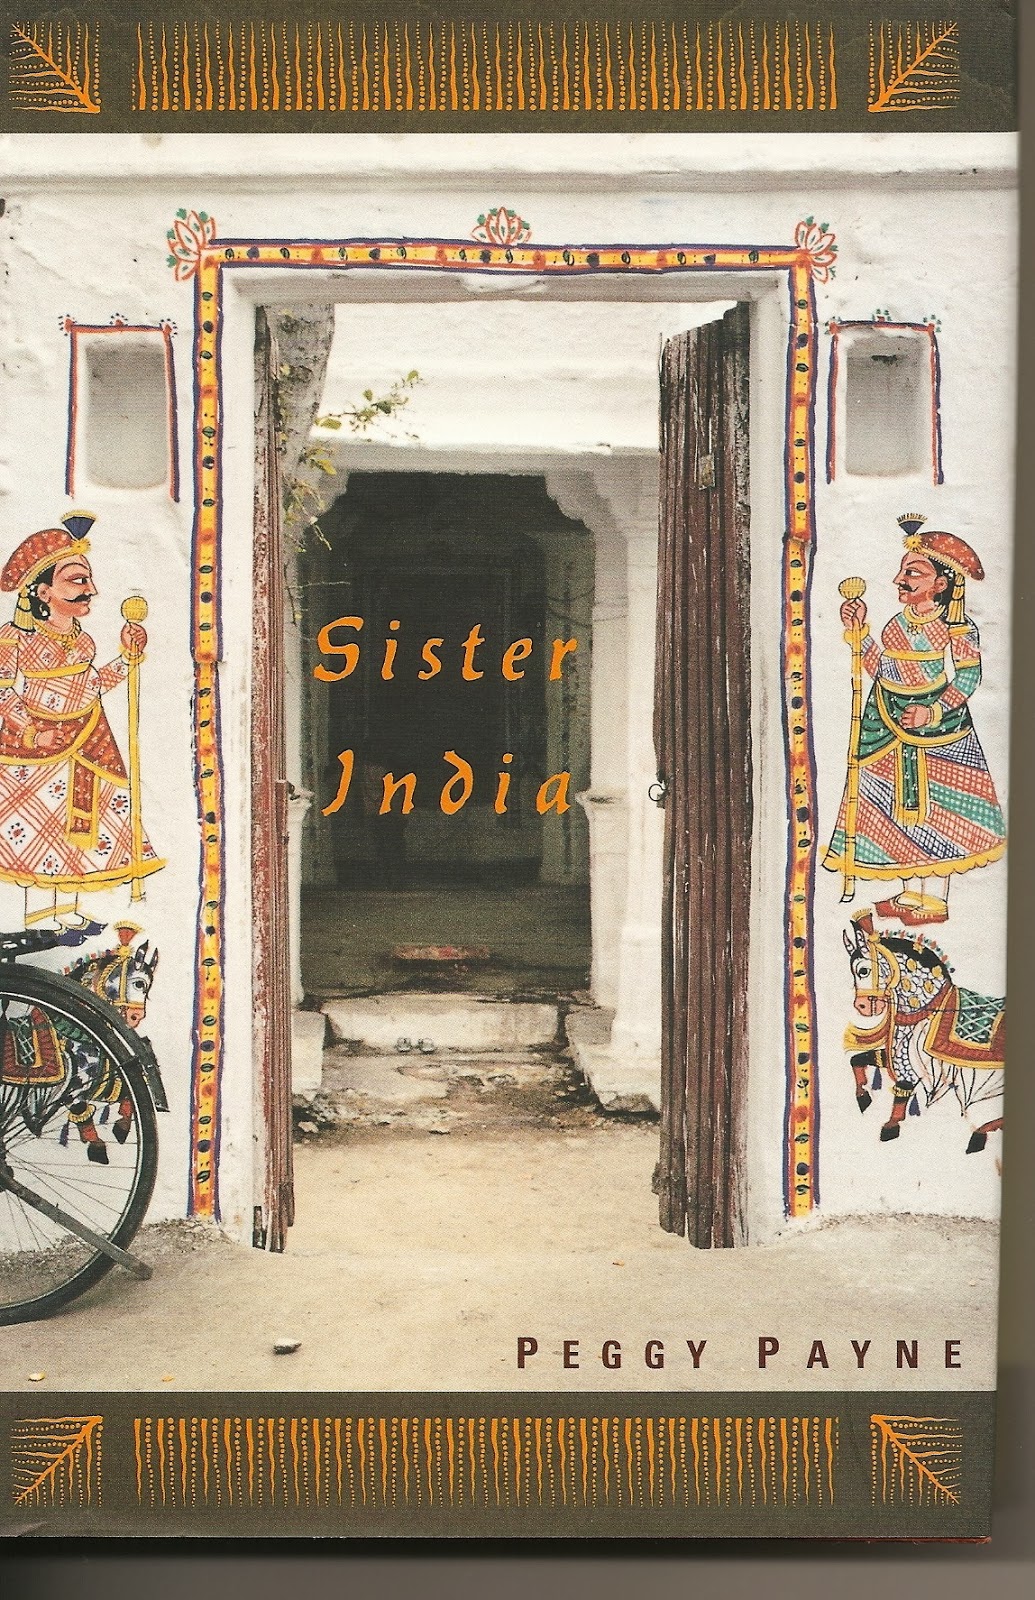 Sister india